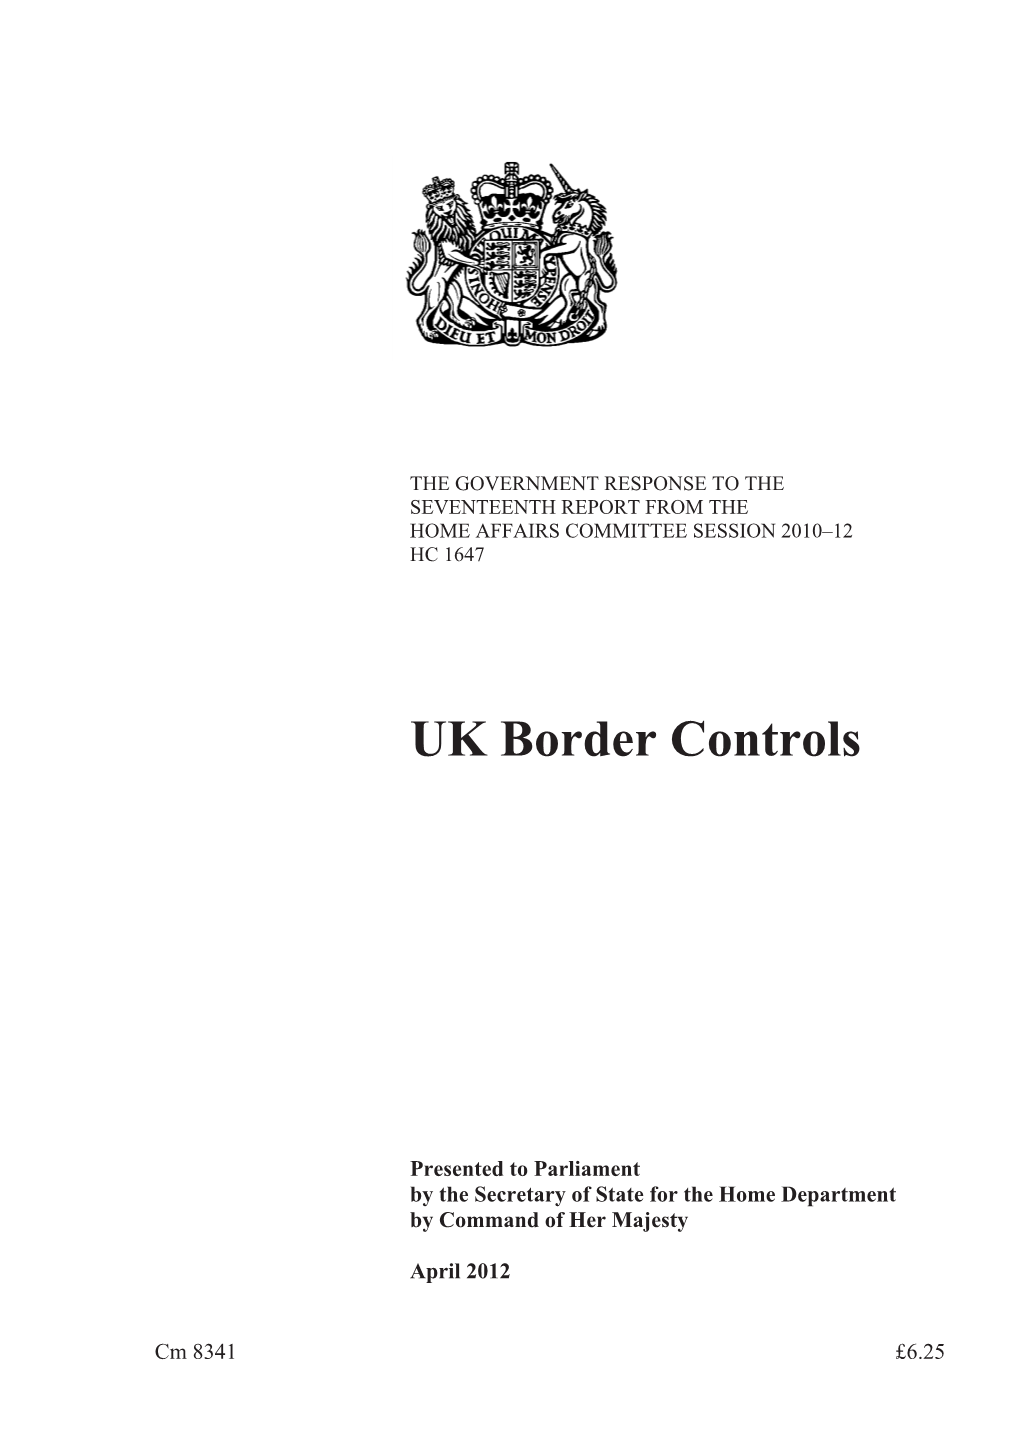 UK Border Controls CM 8341